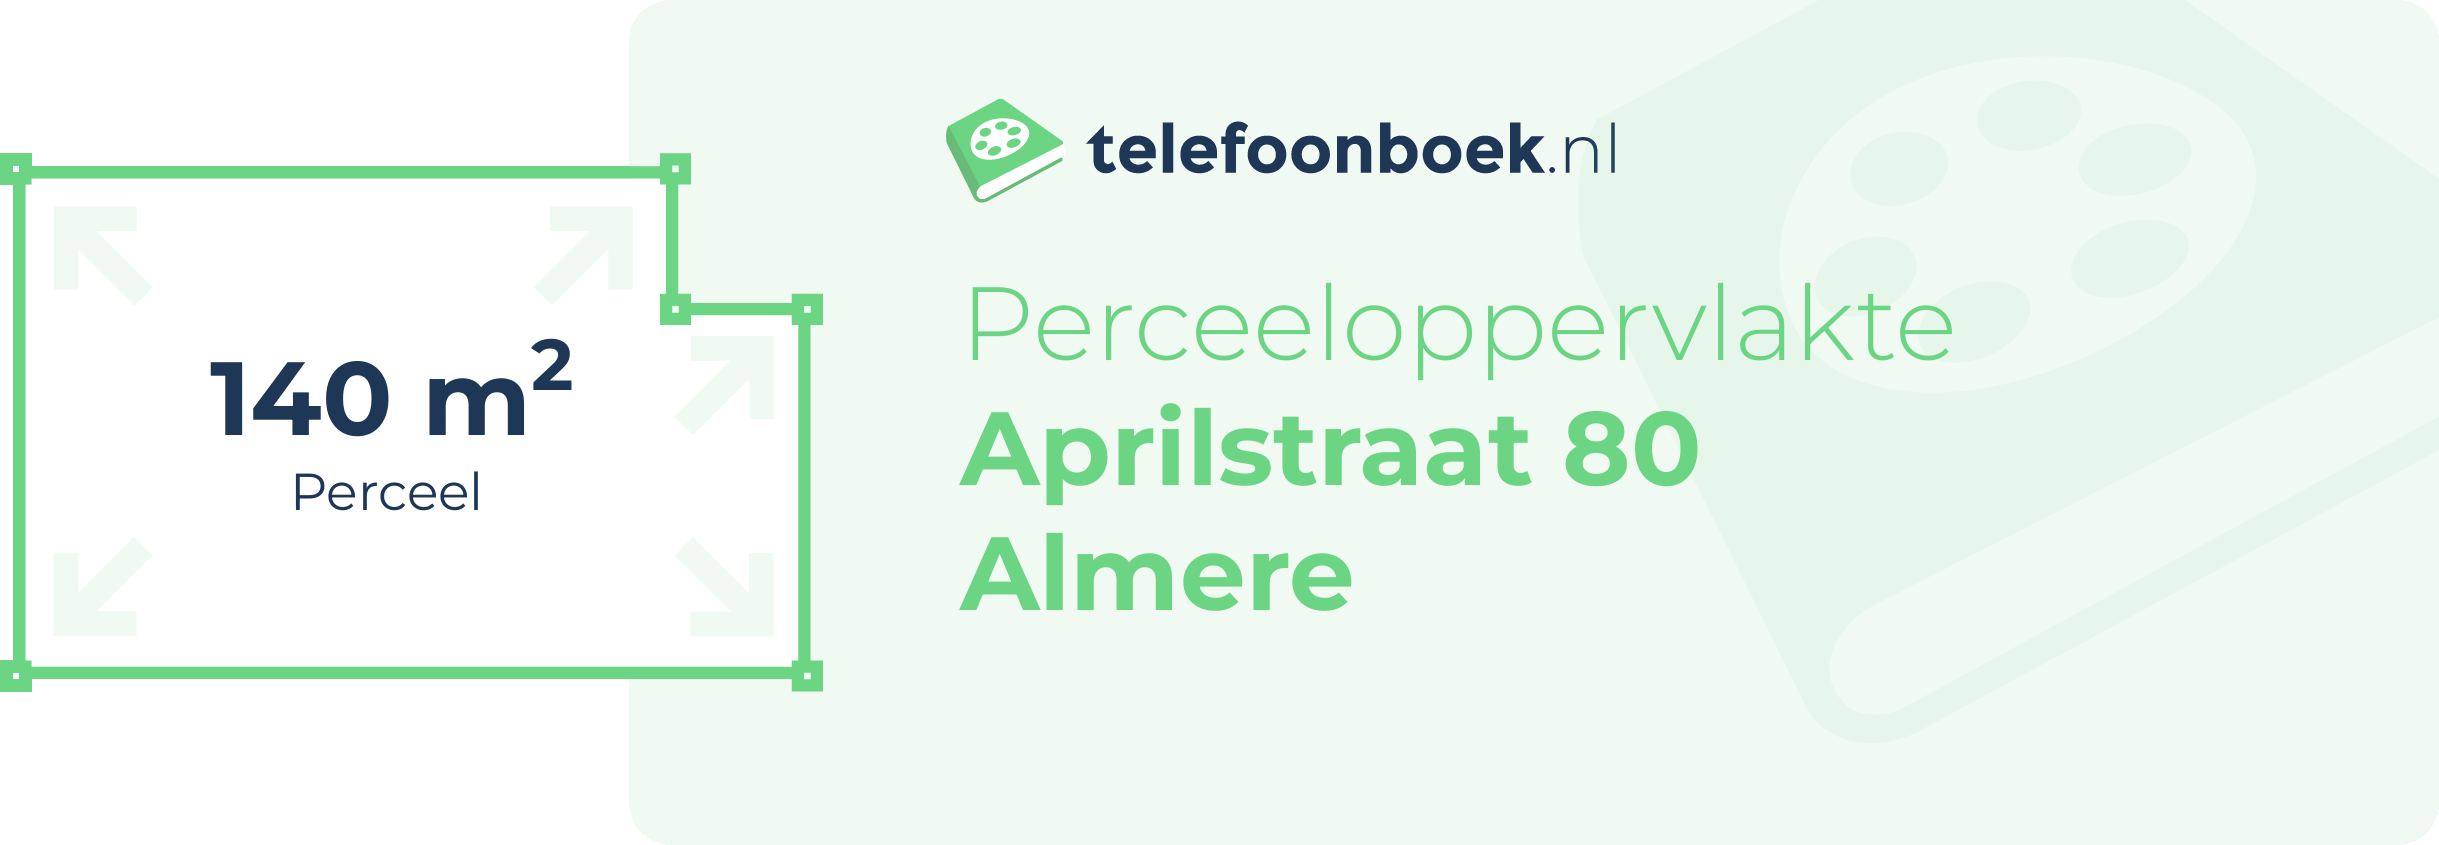 Perceeloppervlakte Aprilstraat 80 Almere